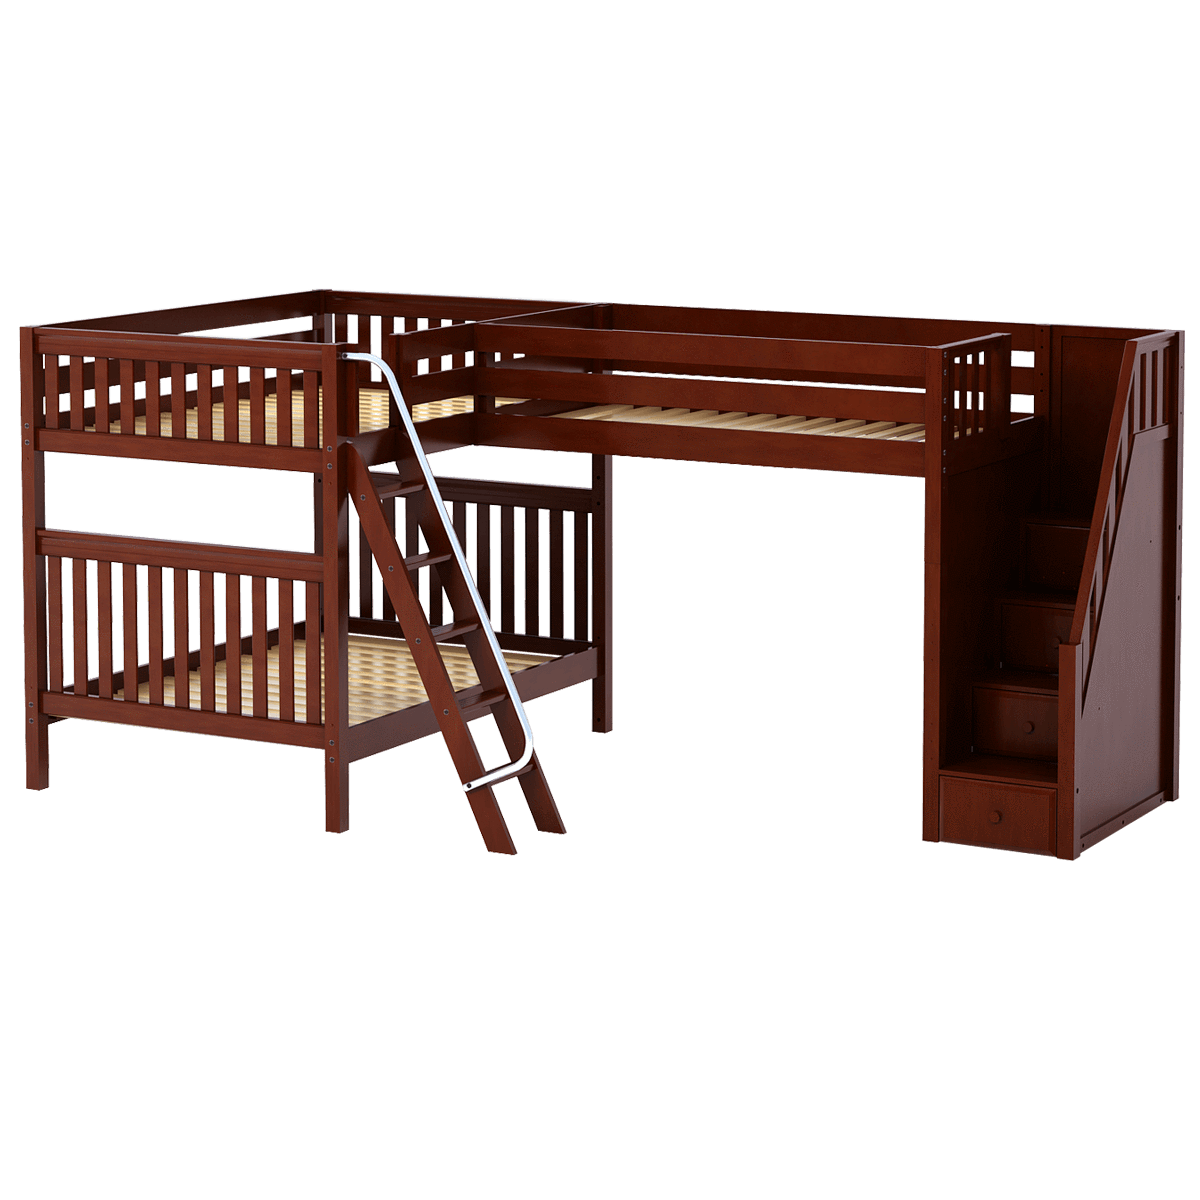 Maxtrix Full High Corner Loft Bunk Bed with Ladder + Stairs - R